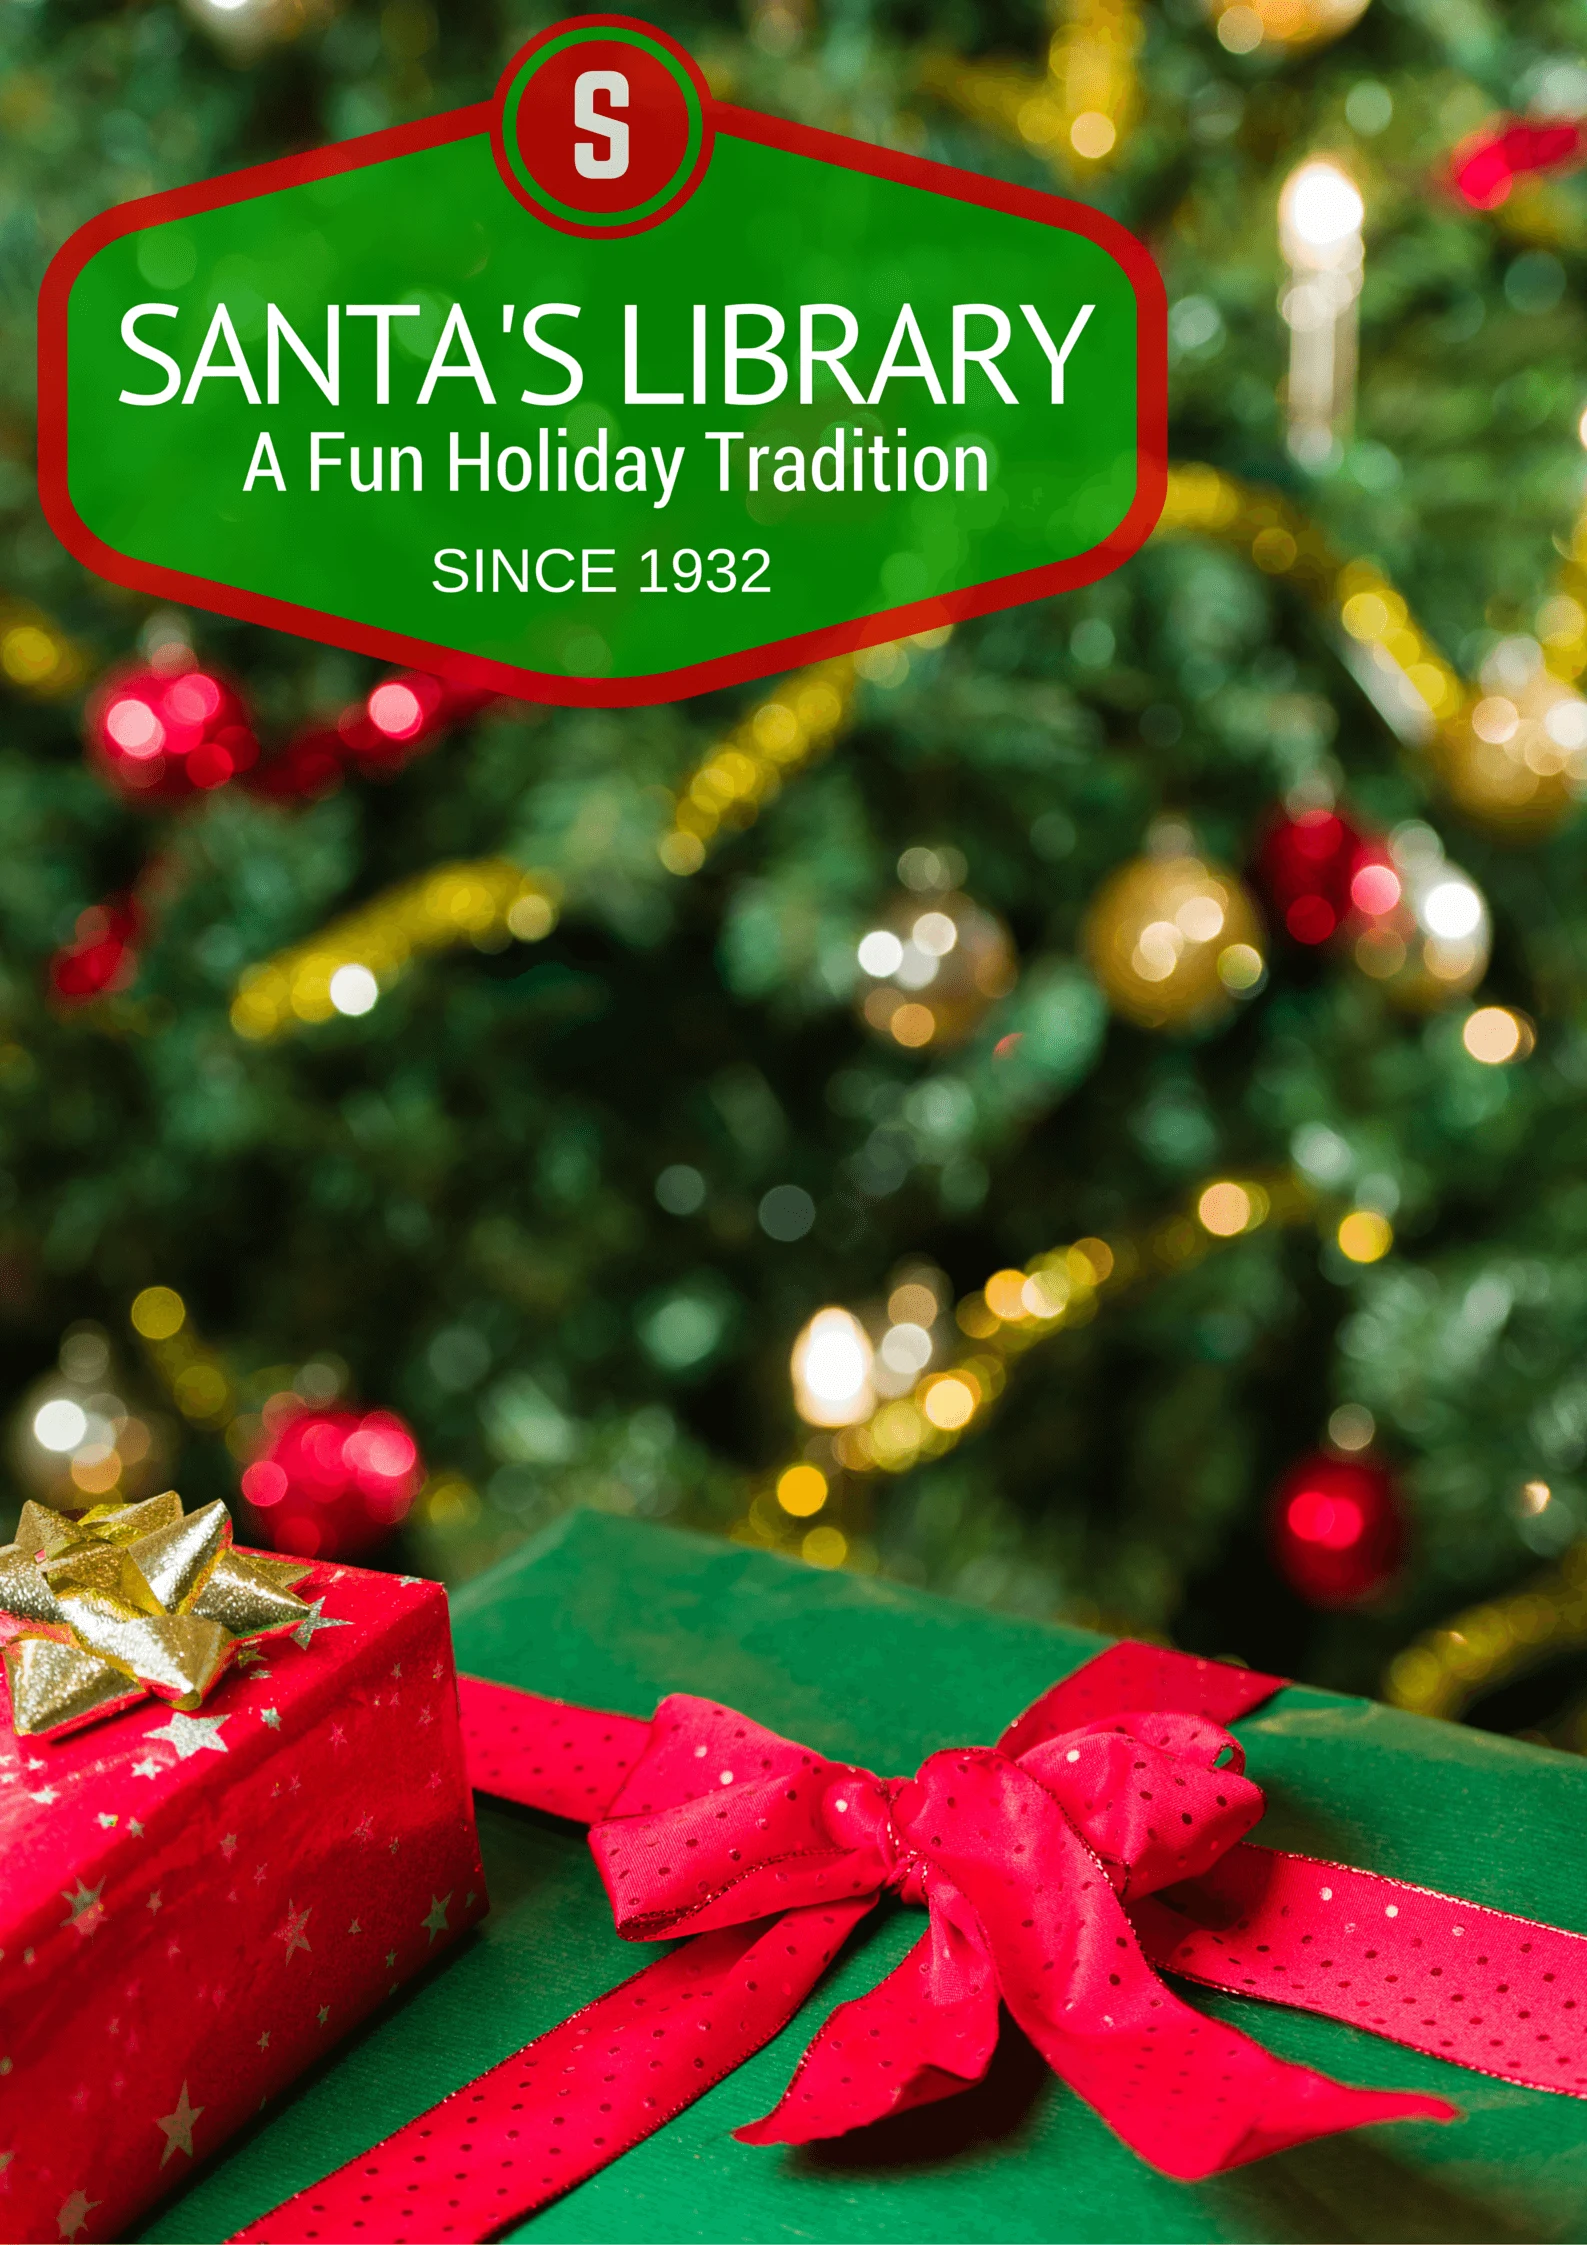 Santa's library